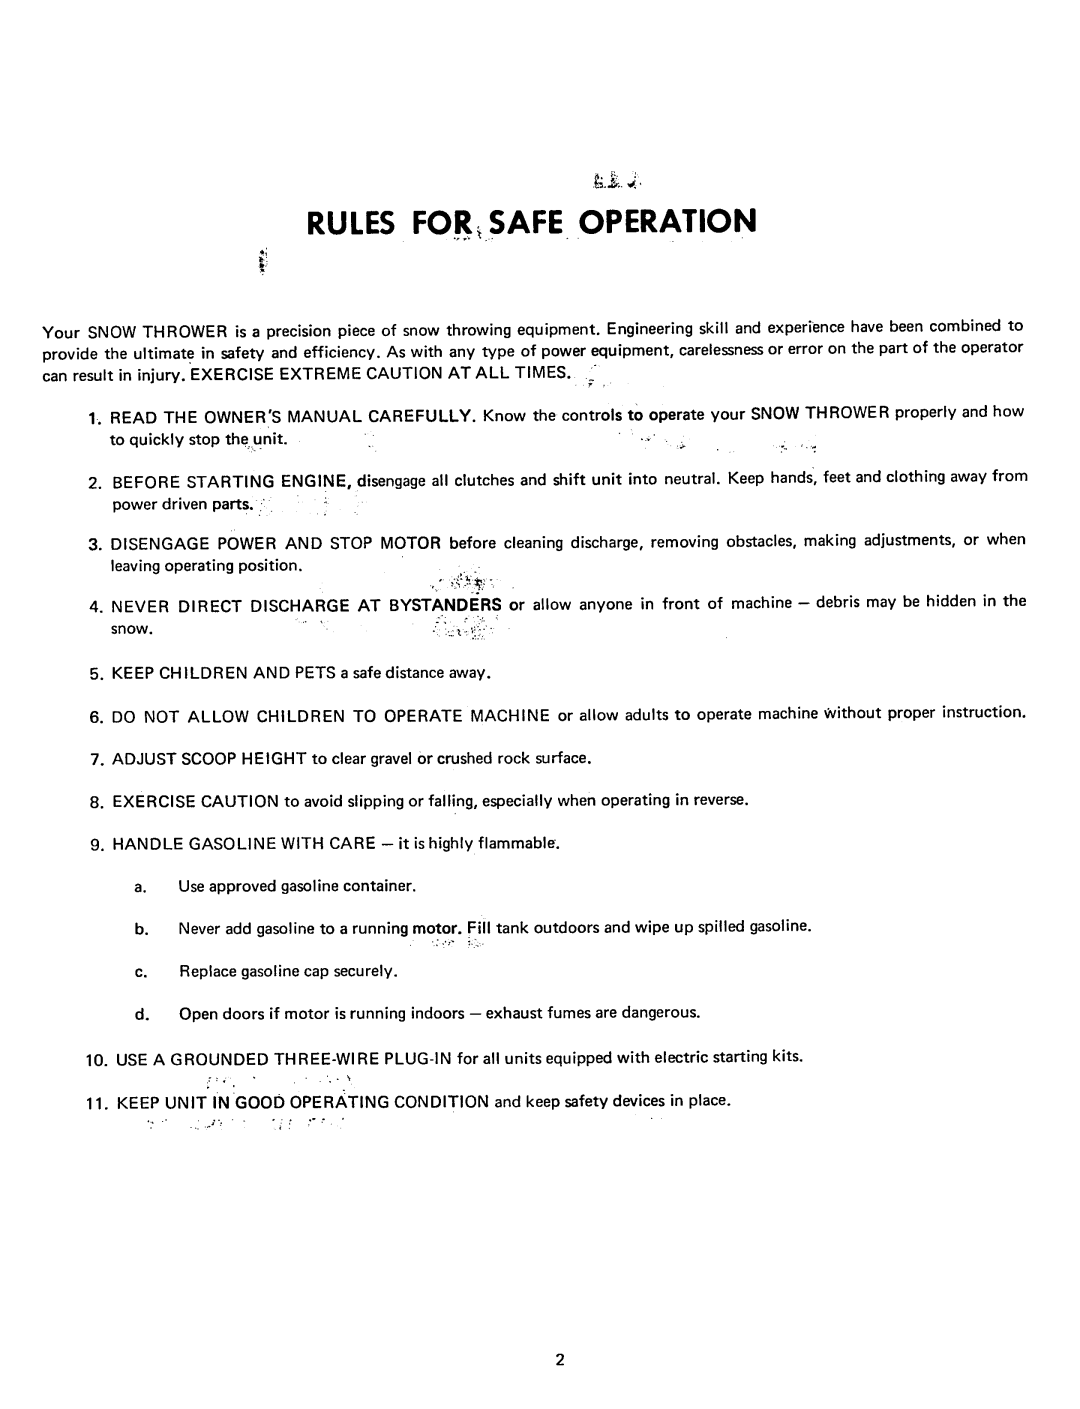 Yard-Man 7100-1 manual Rules Fo.~~Safe Operation 